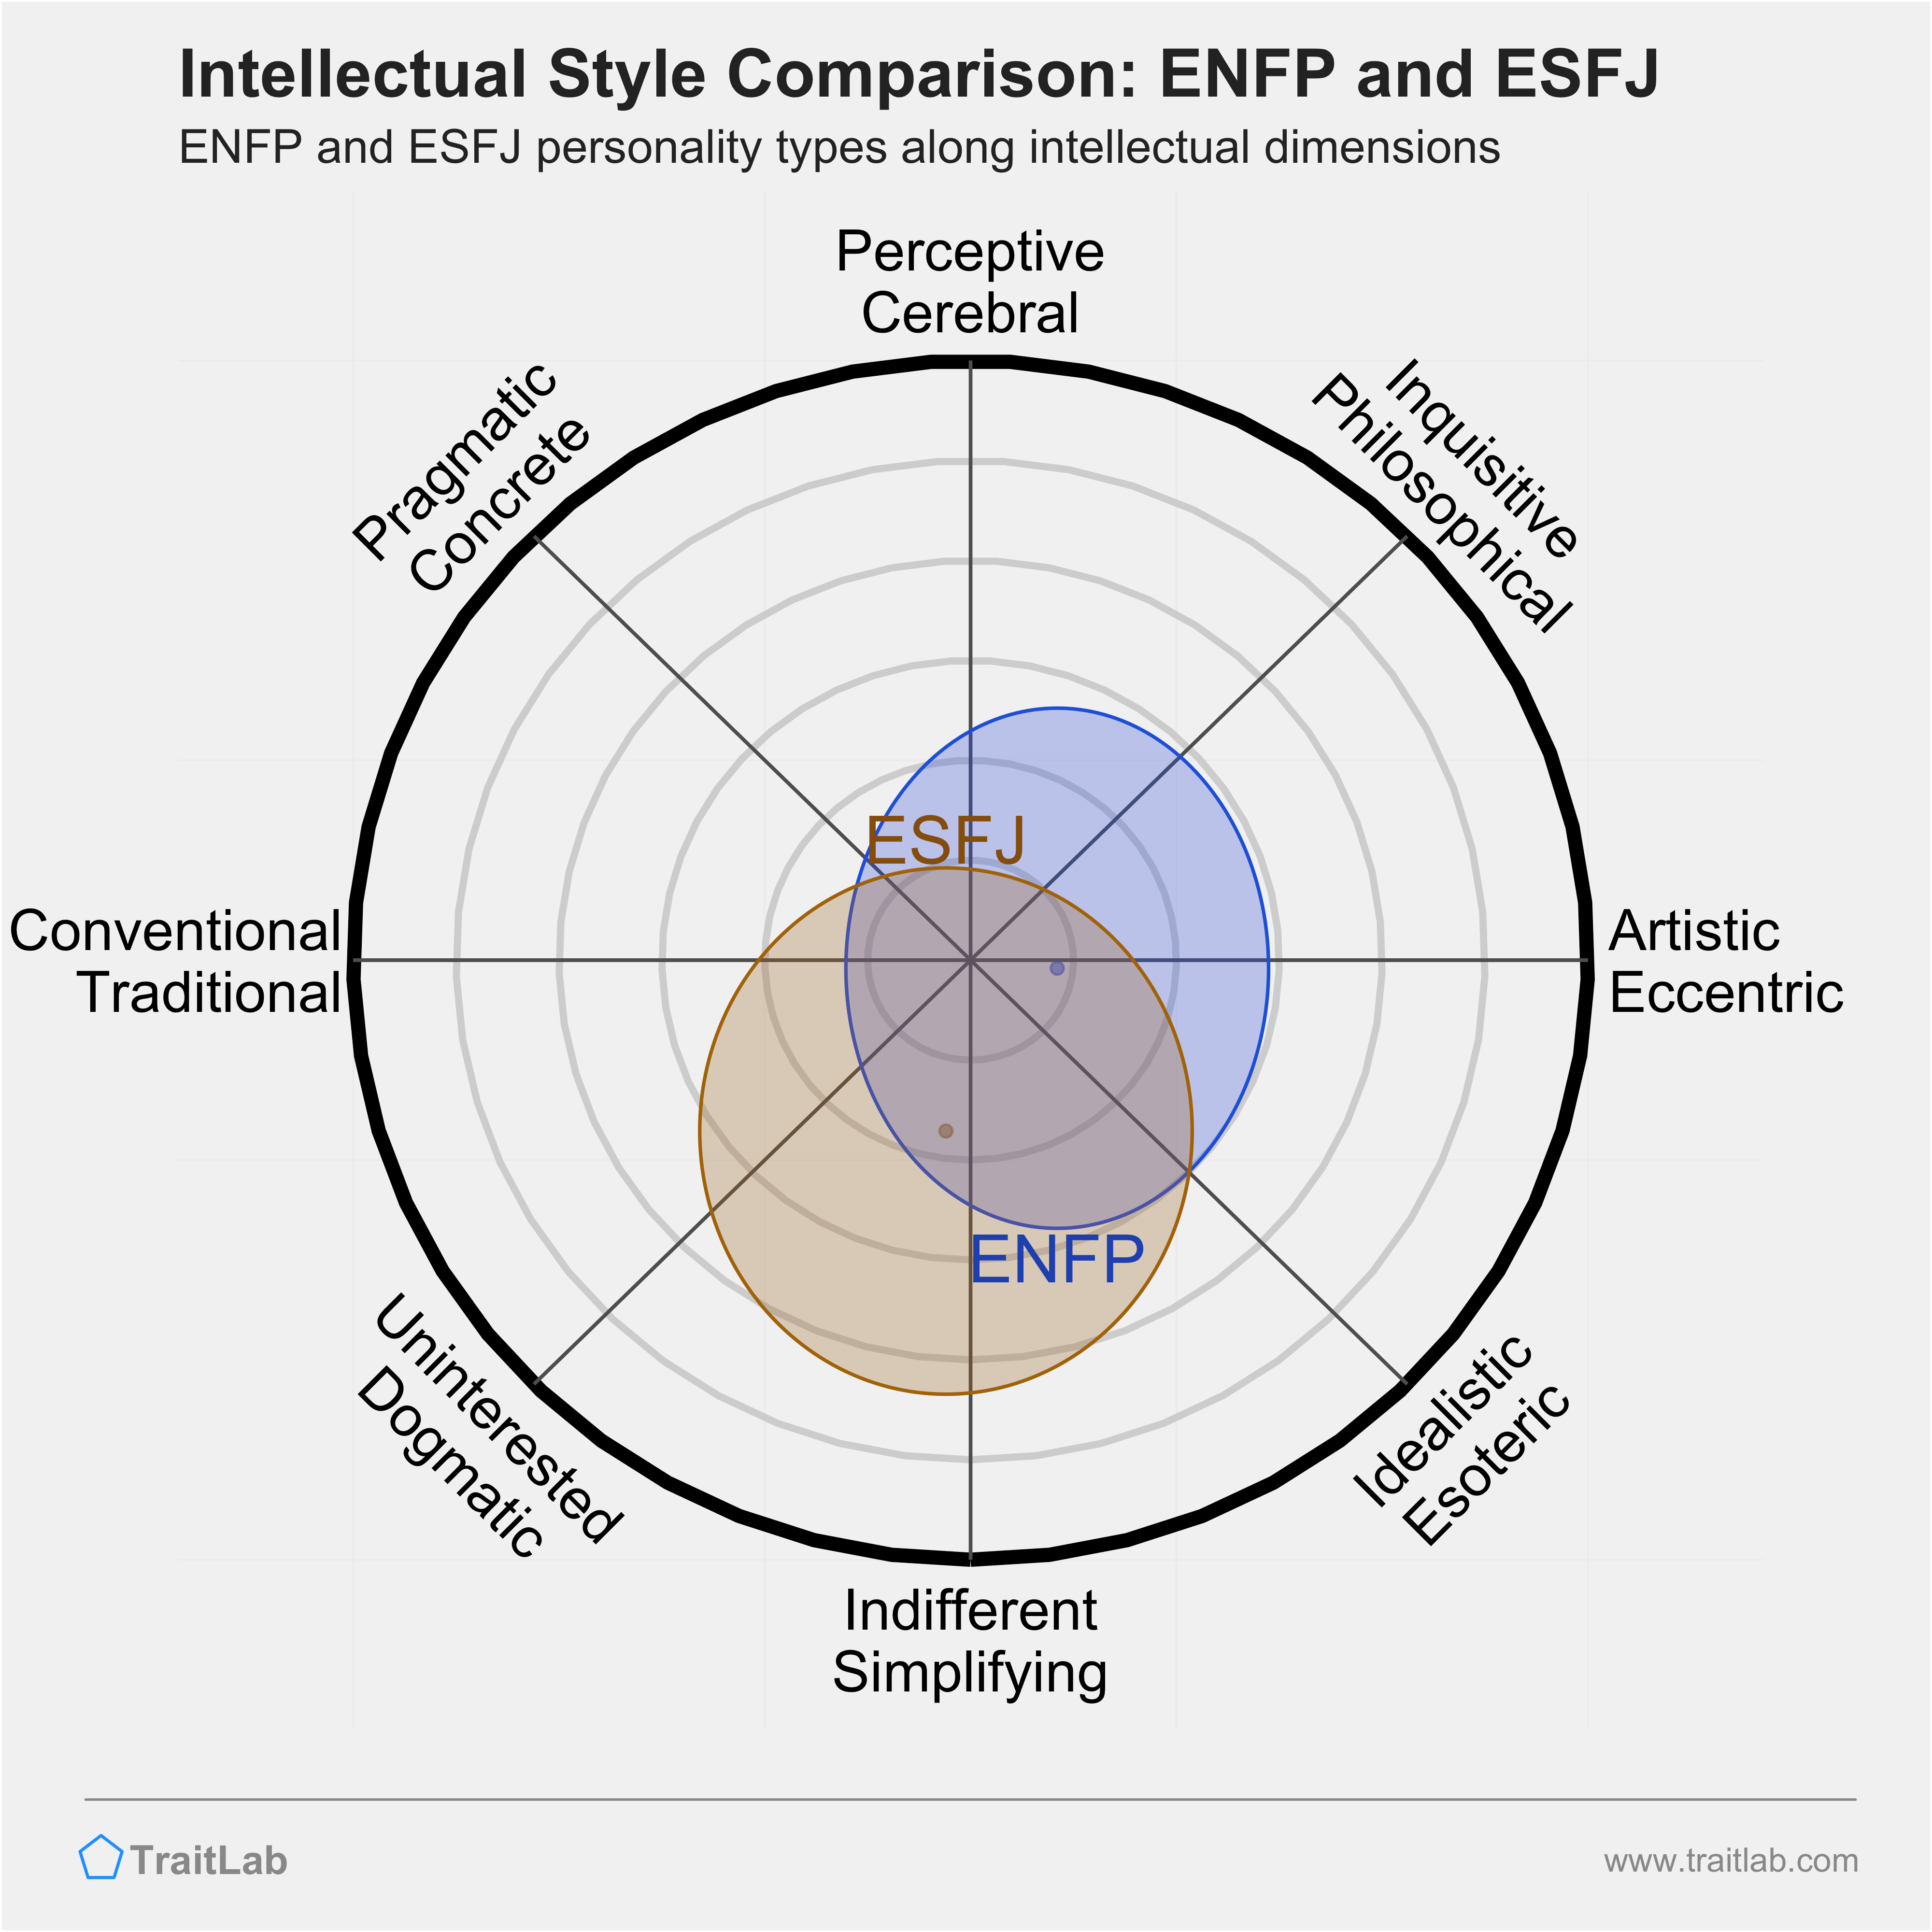 ENFP and ESFJ comparison across intellectual dimensions